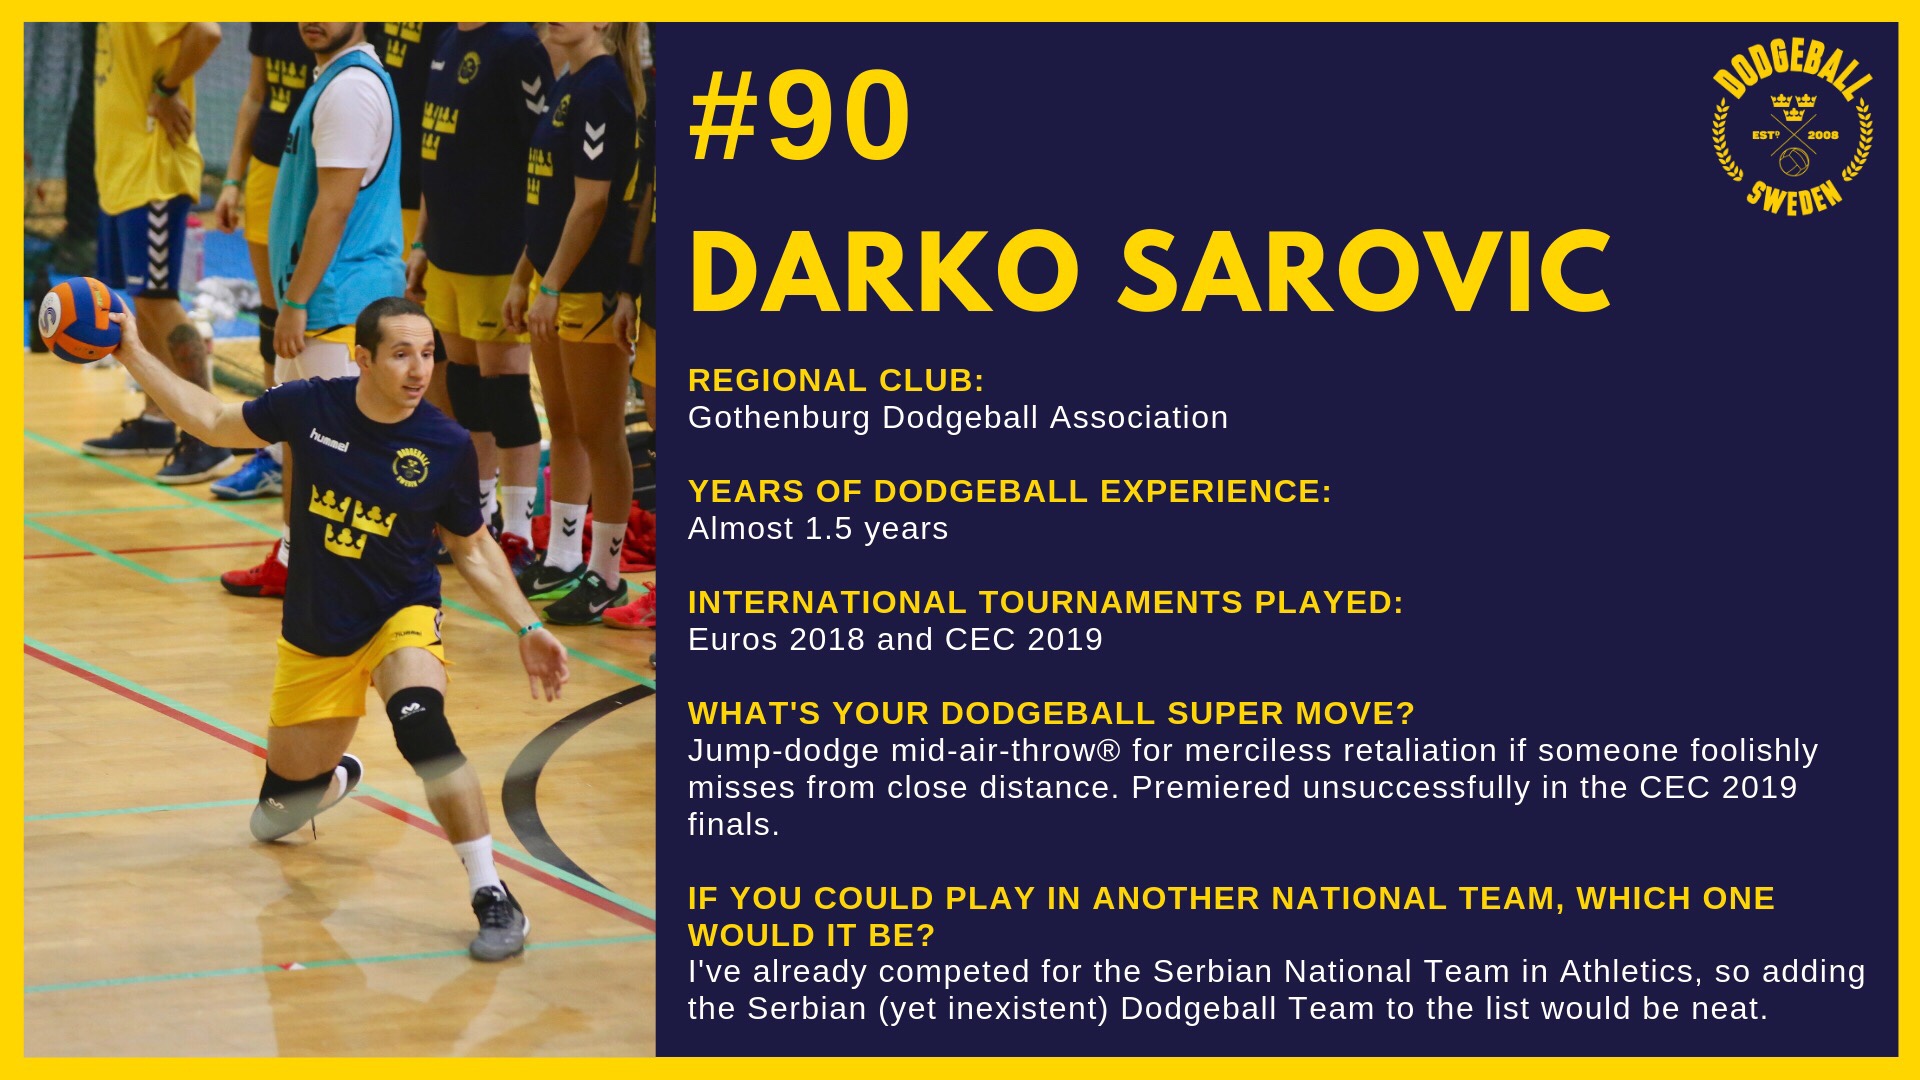 European Dodgeball Championships live stream — DARKO SAROVIC